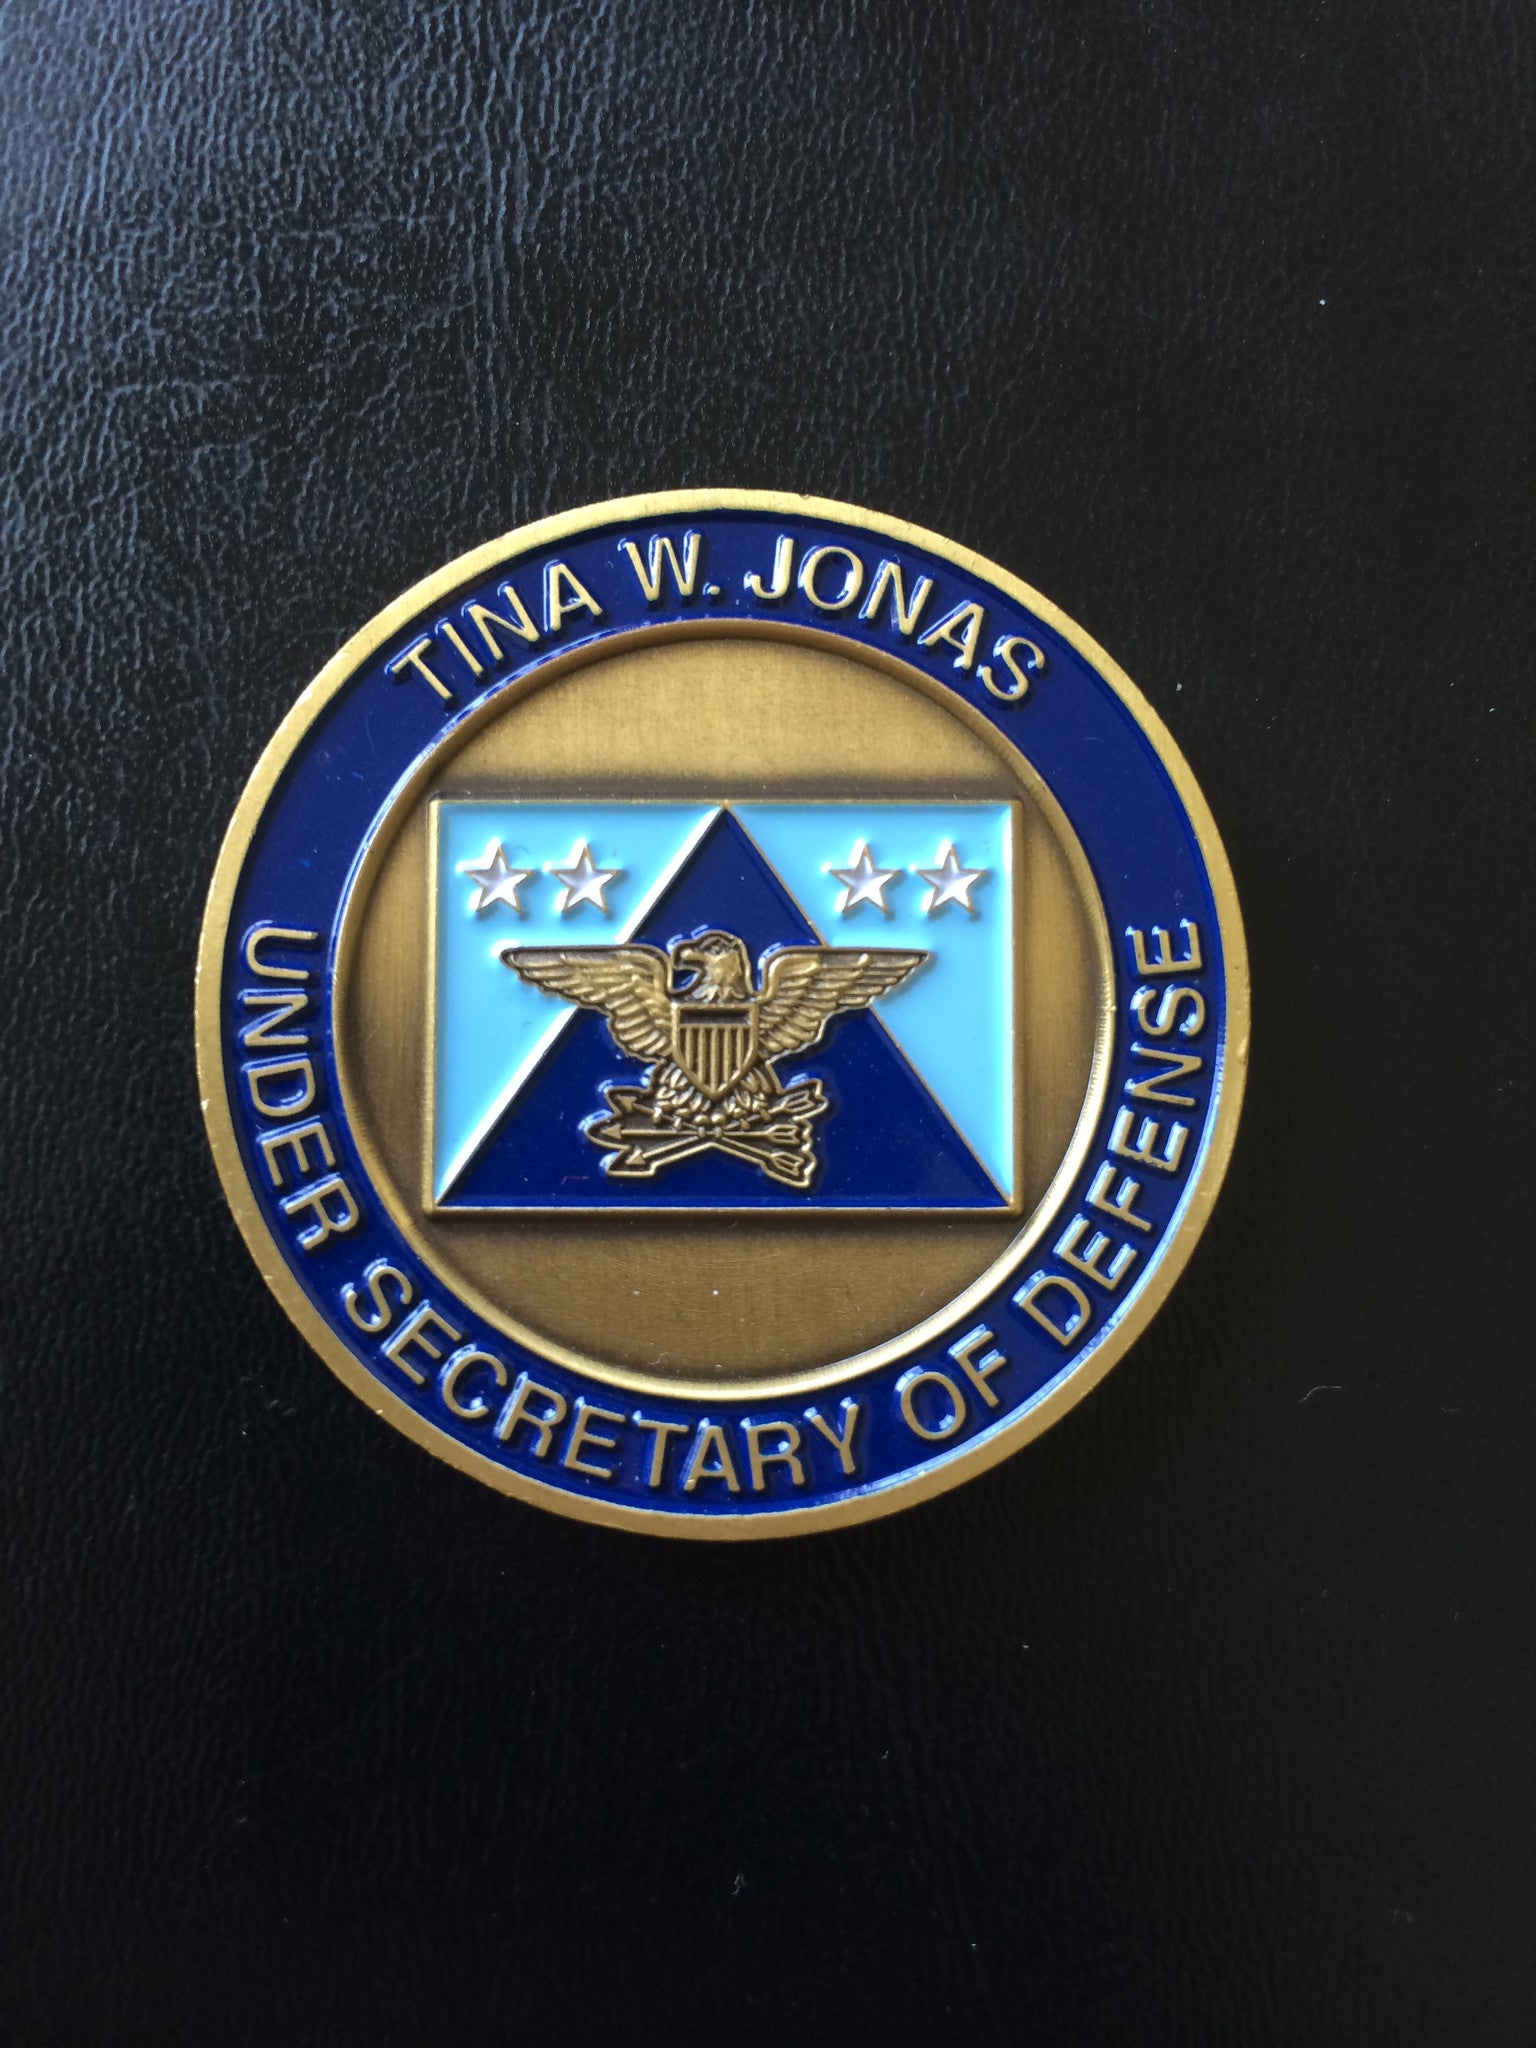 Under Secretary of Defense (Comptroller/Chief Financial Officer) Tina W. Jones